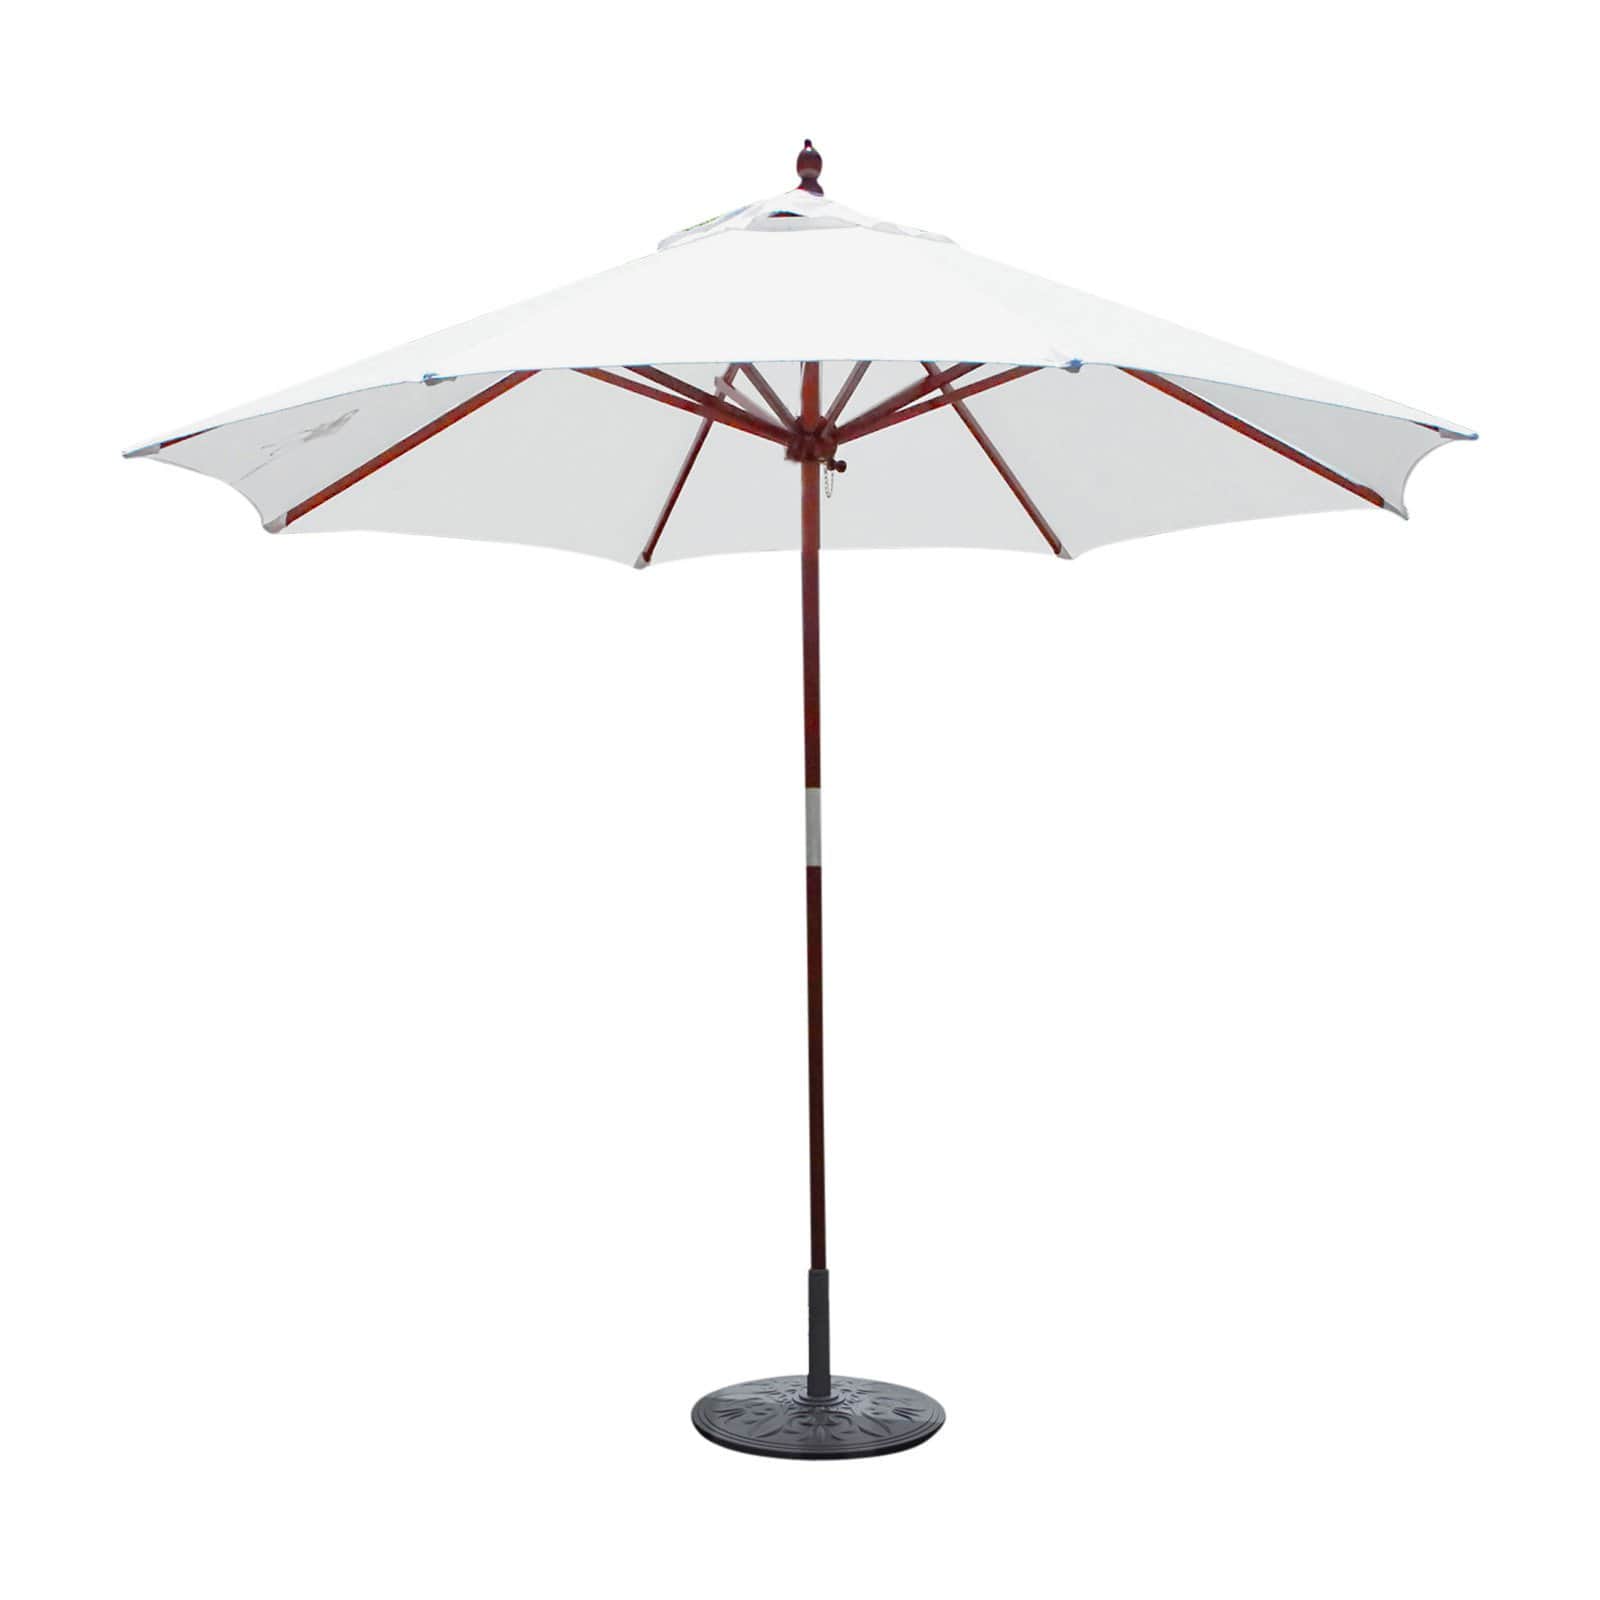 Galtech 9-ft. Double Pulley Sunbrella Patio Umbrella - image 2 of 10